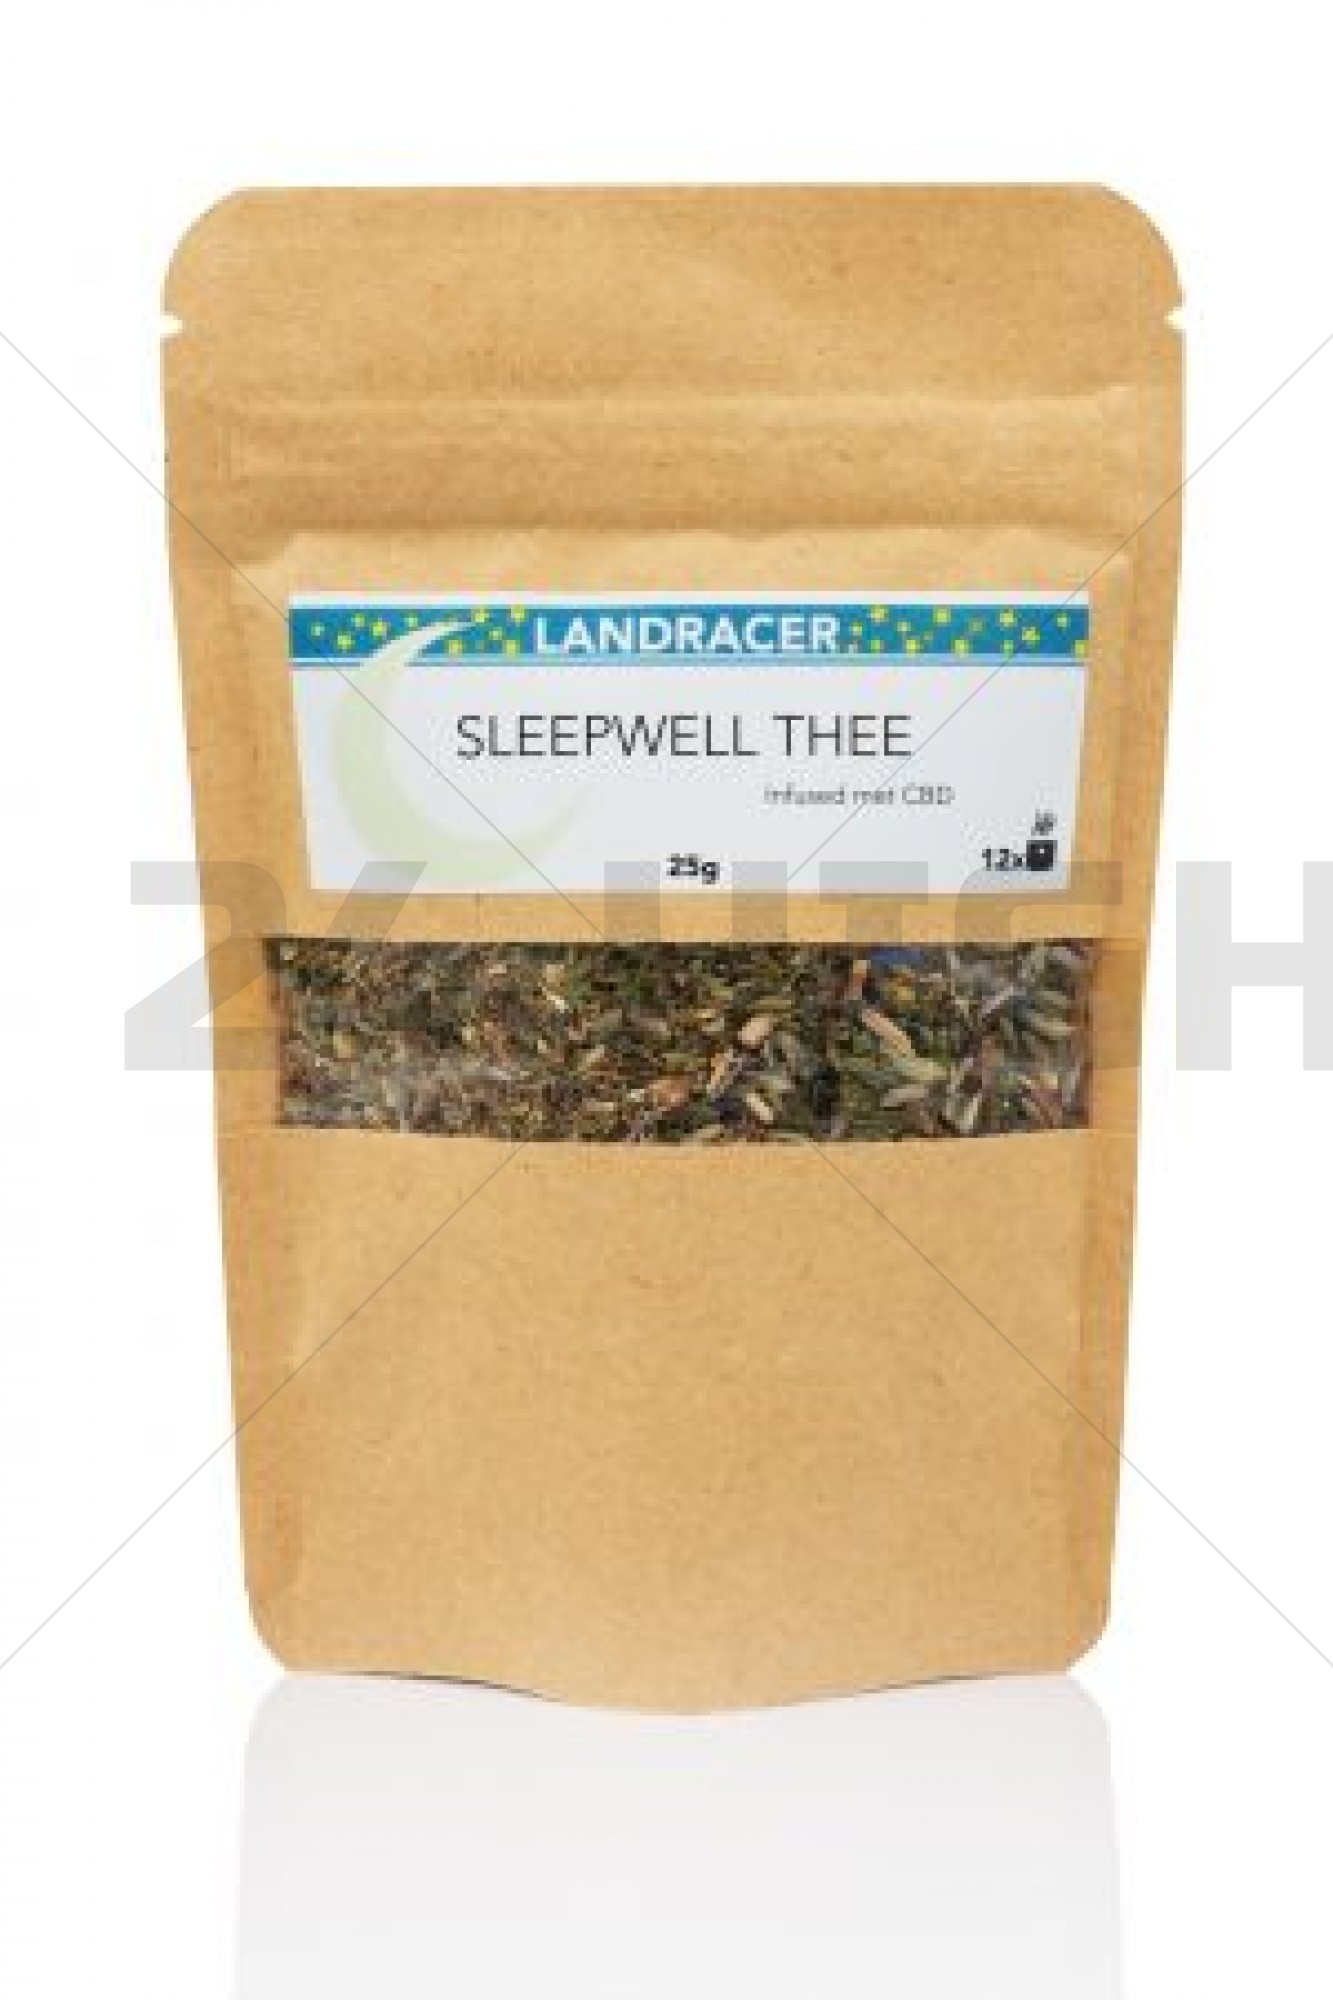 Landracer Sleepwell tea infused Cannabidiol - 25gr